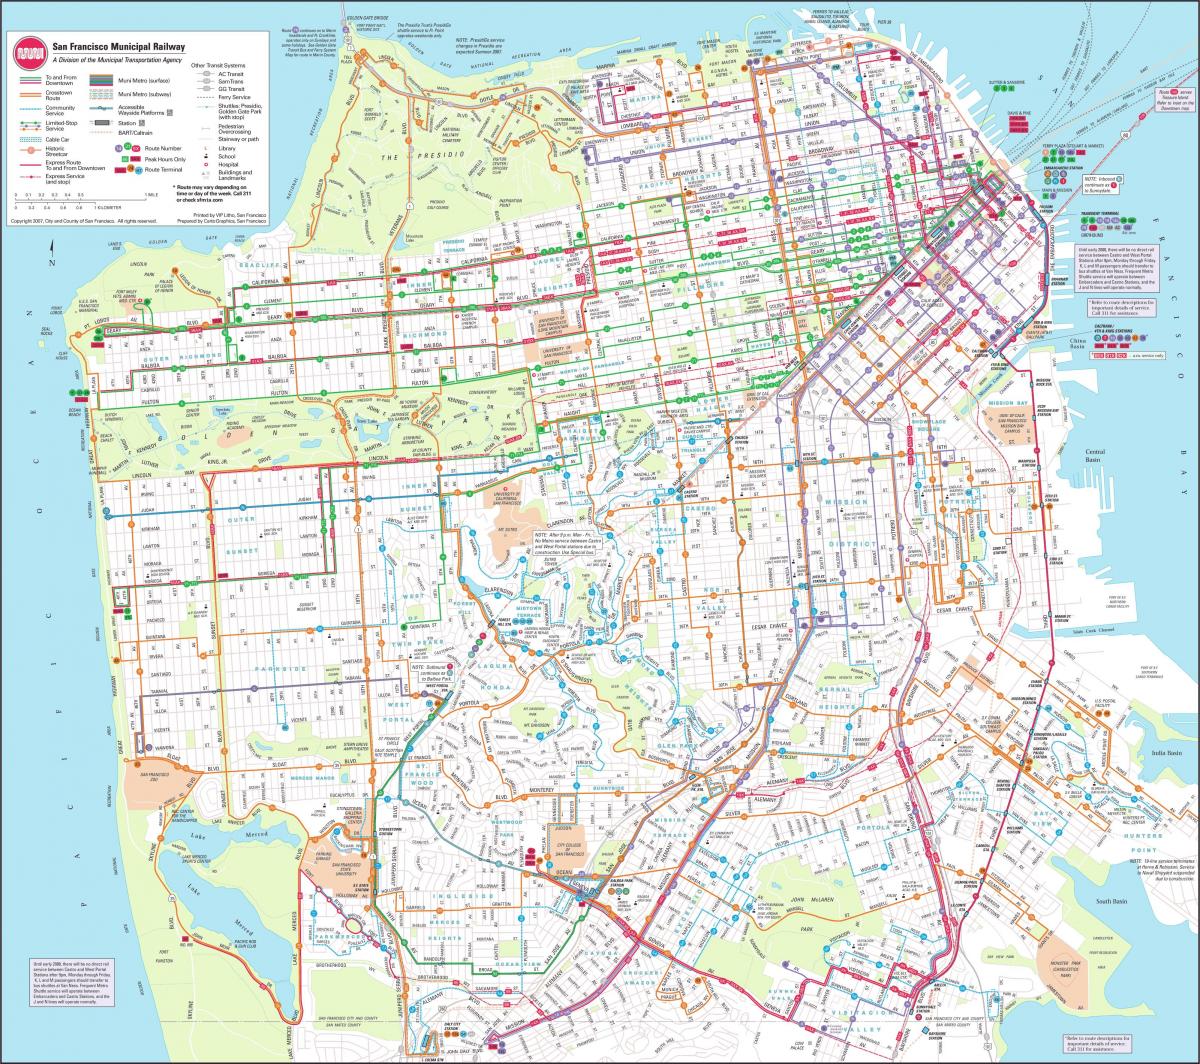 Carte de San Francisco municipal railway